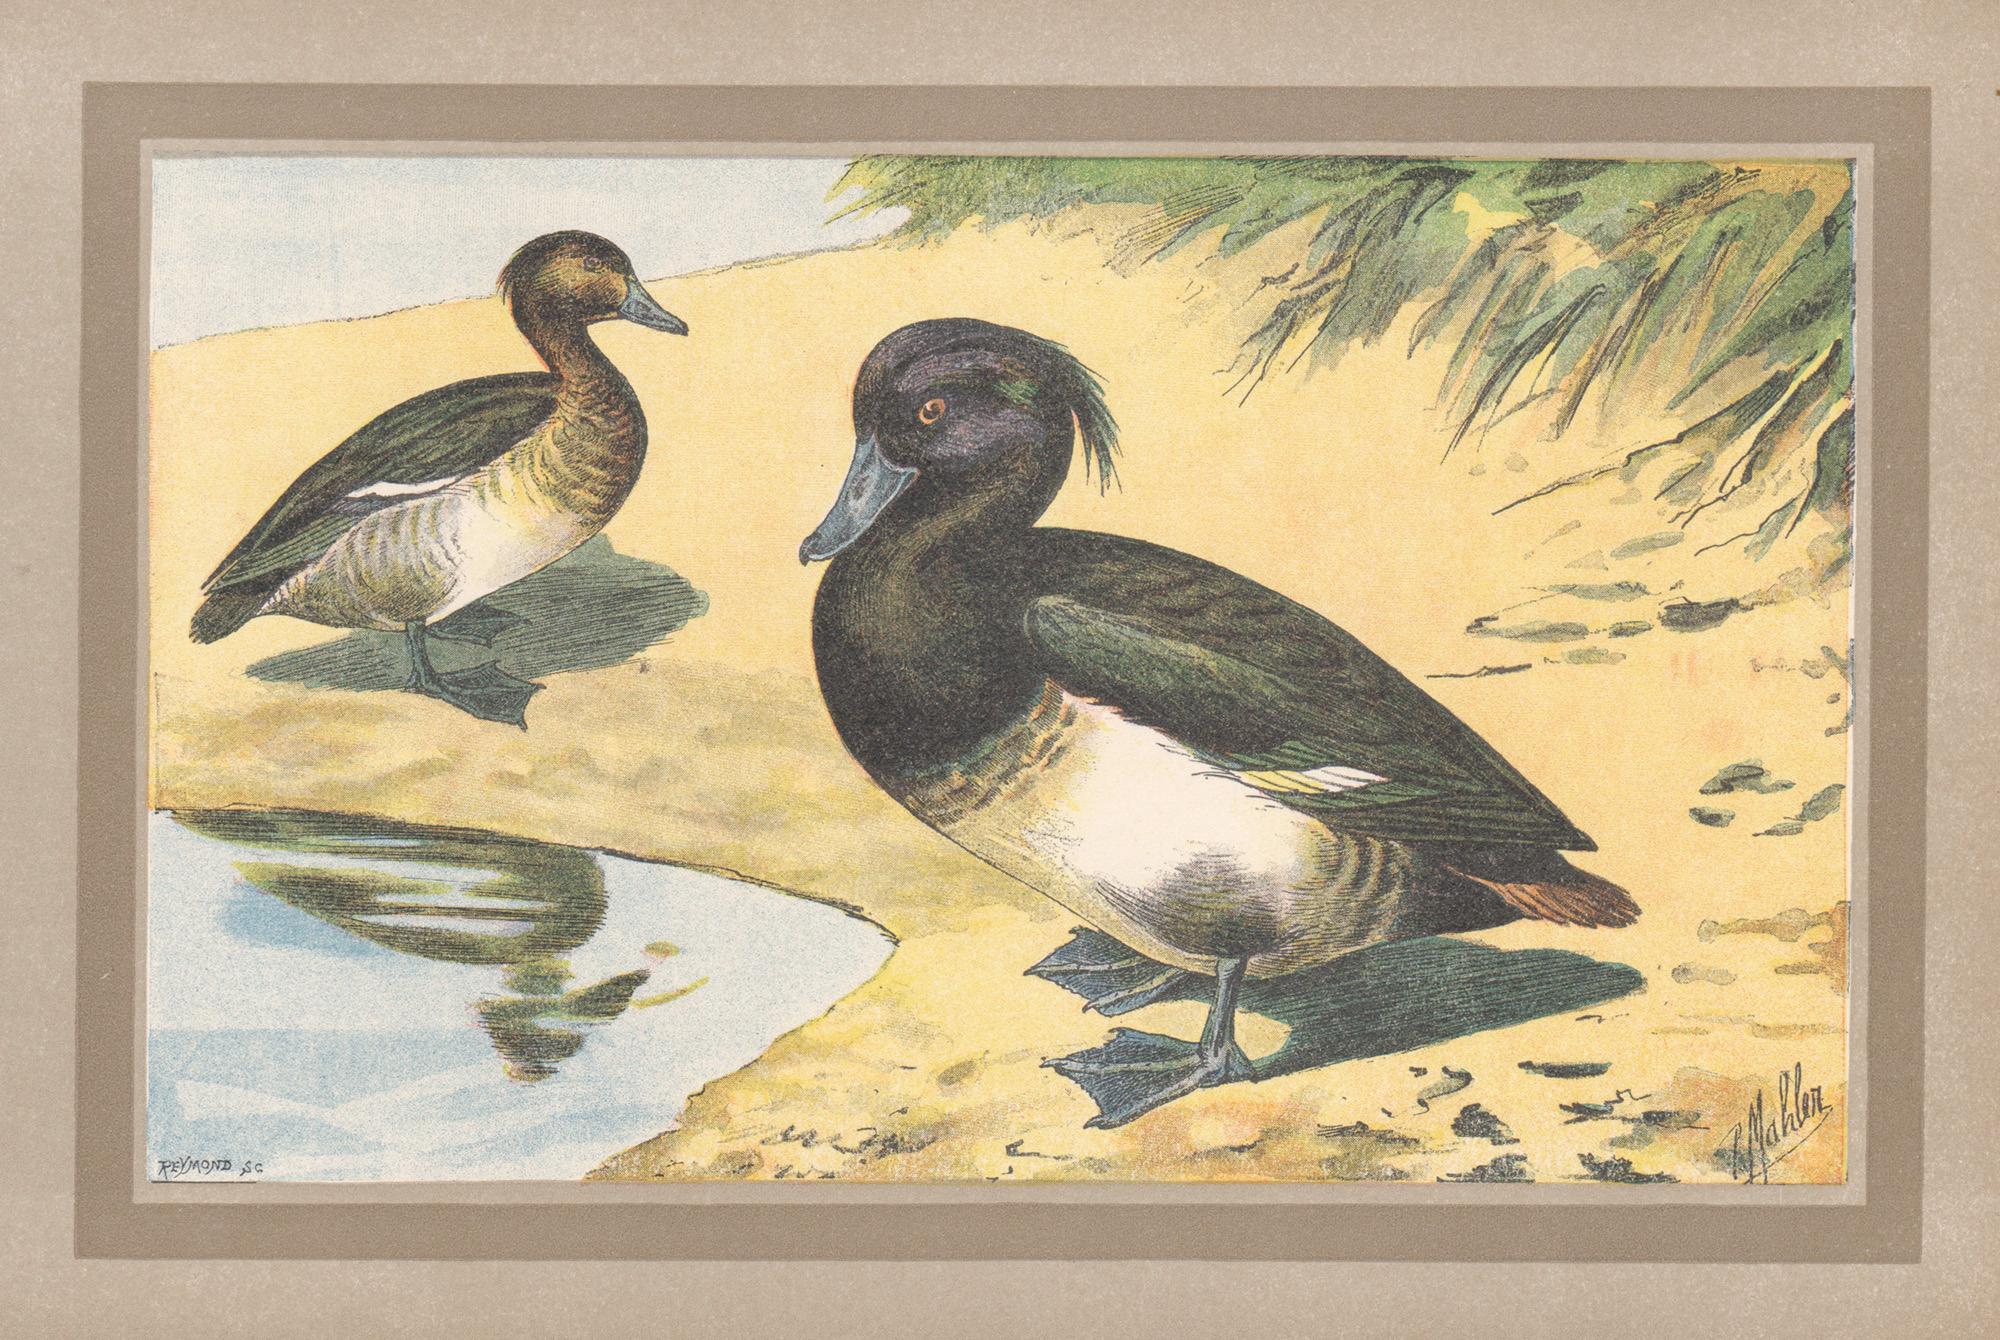 P. Mahler Animal Print - Tufted Duck, French antique bird duck art illustration print